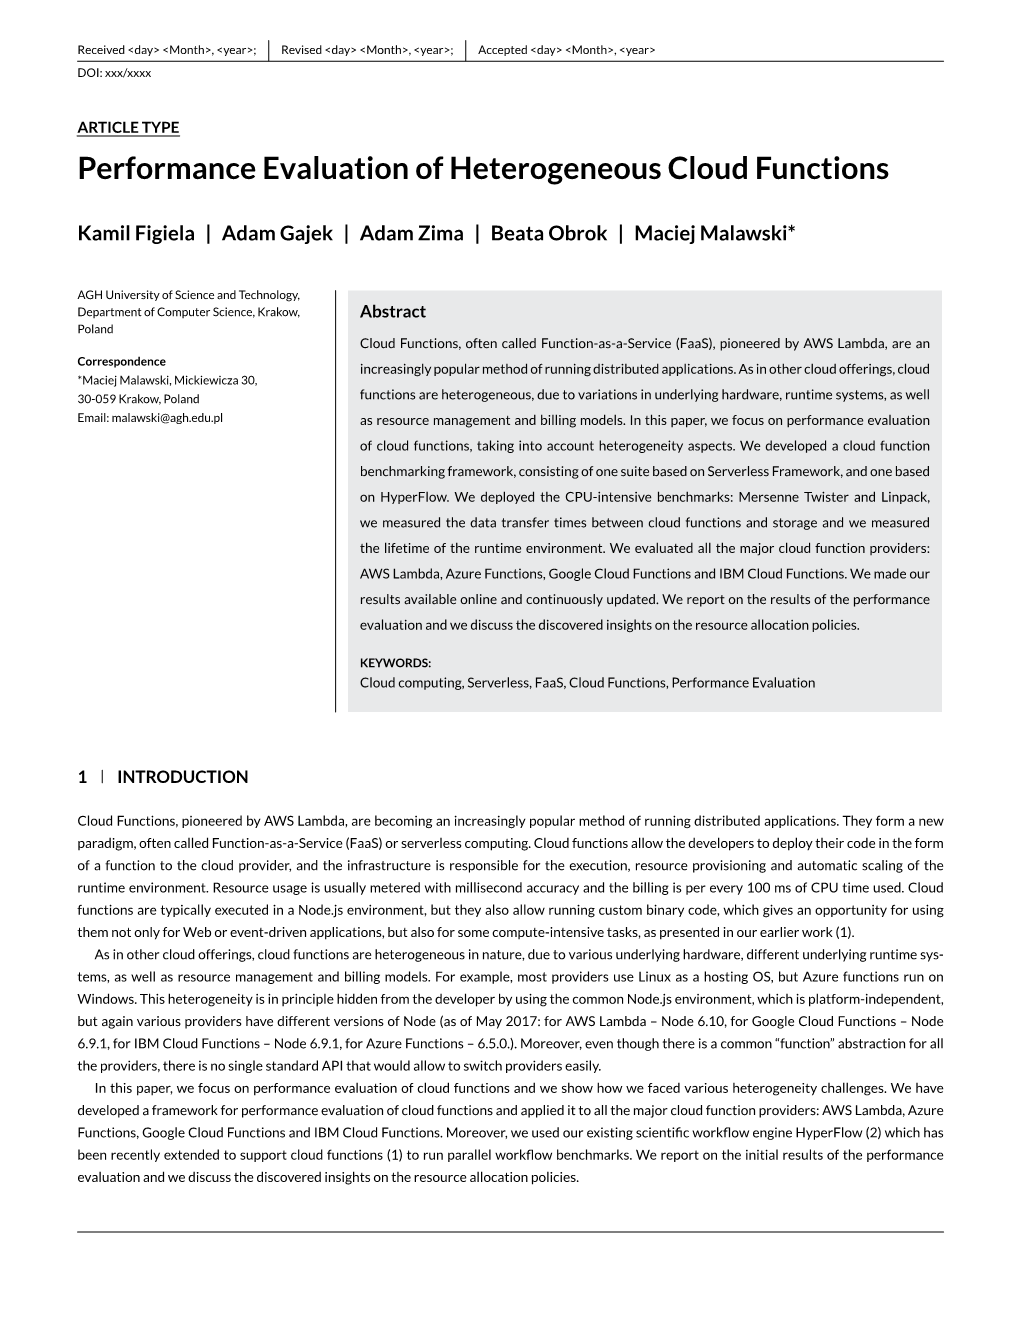 Performance Evaluation of Heterogeneous Cloud Functions